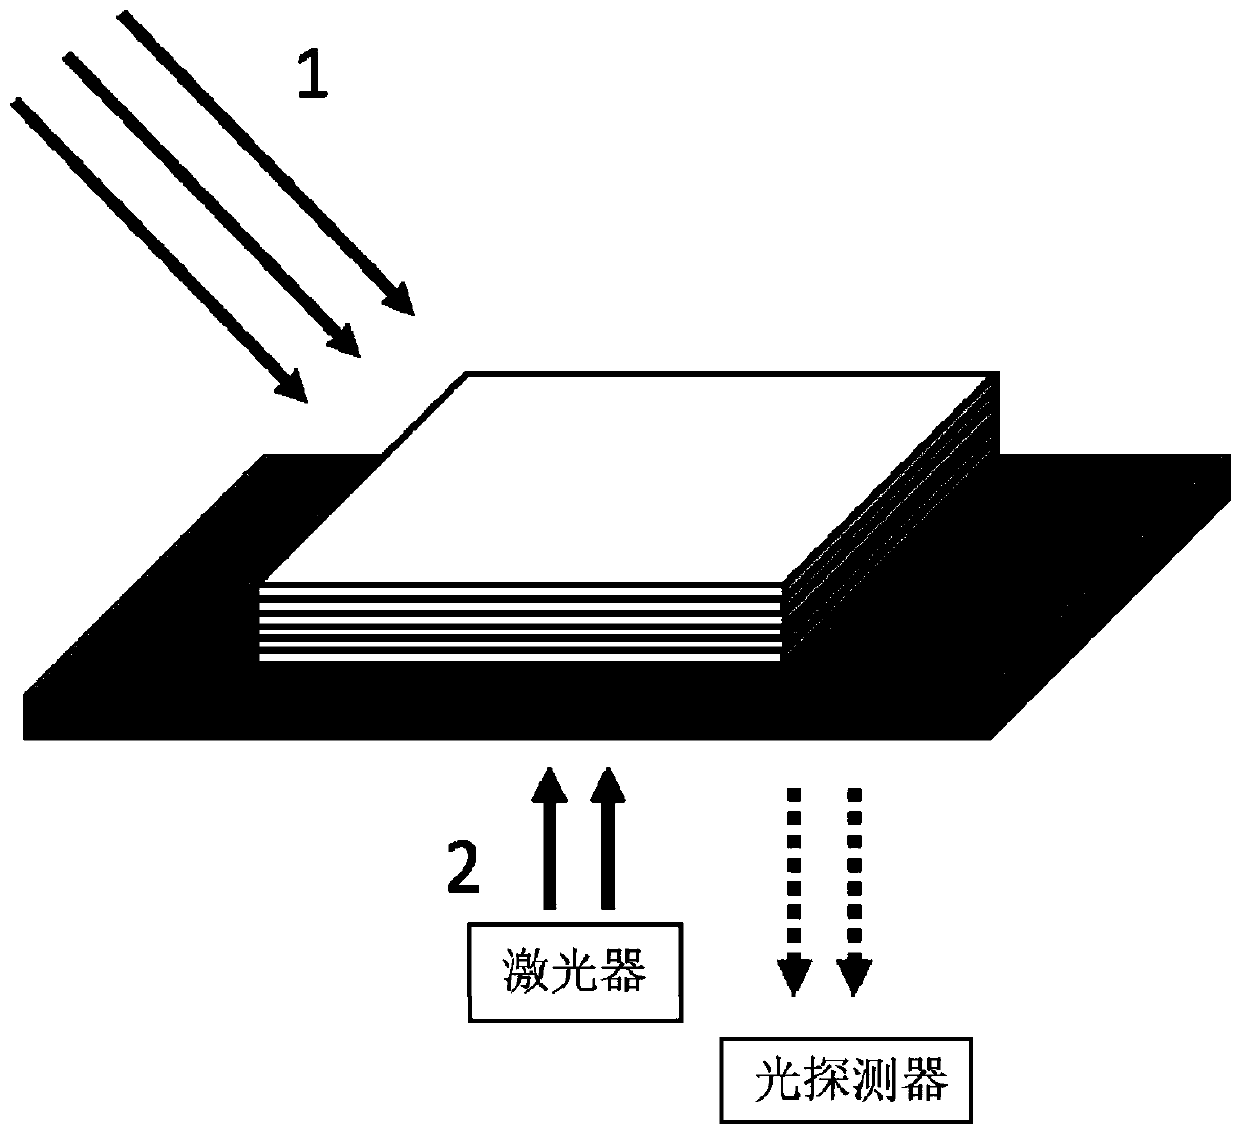 A multilayer film photodetector based on optical singular point design and its detection method